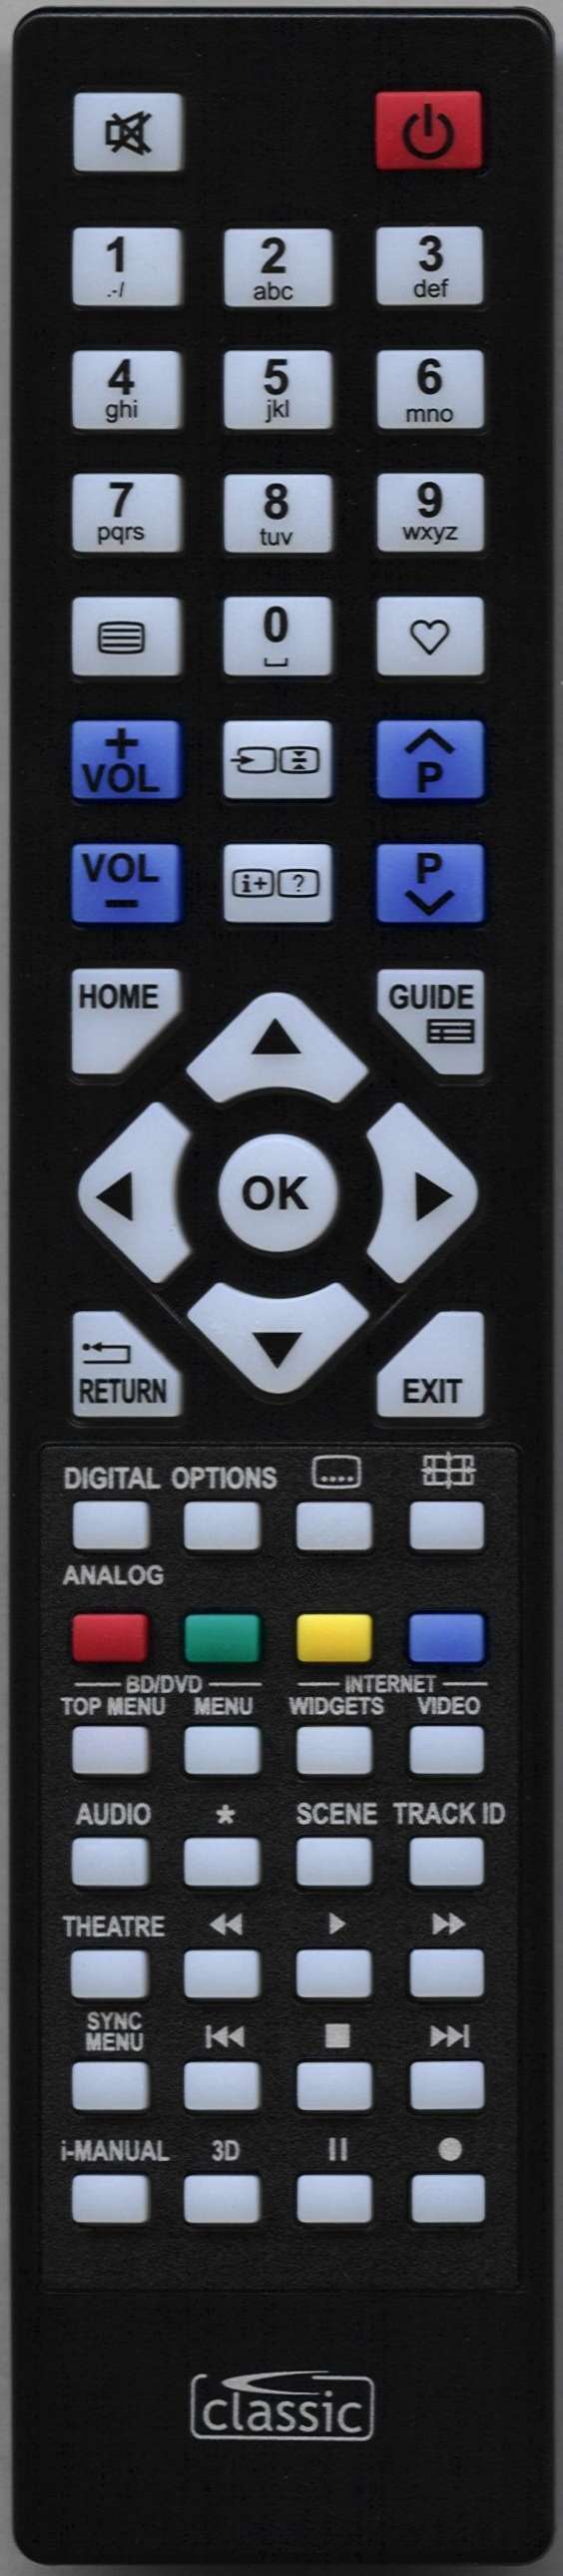 SONY KDL32EX503 Remote Control